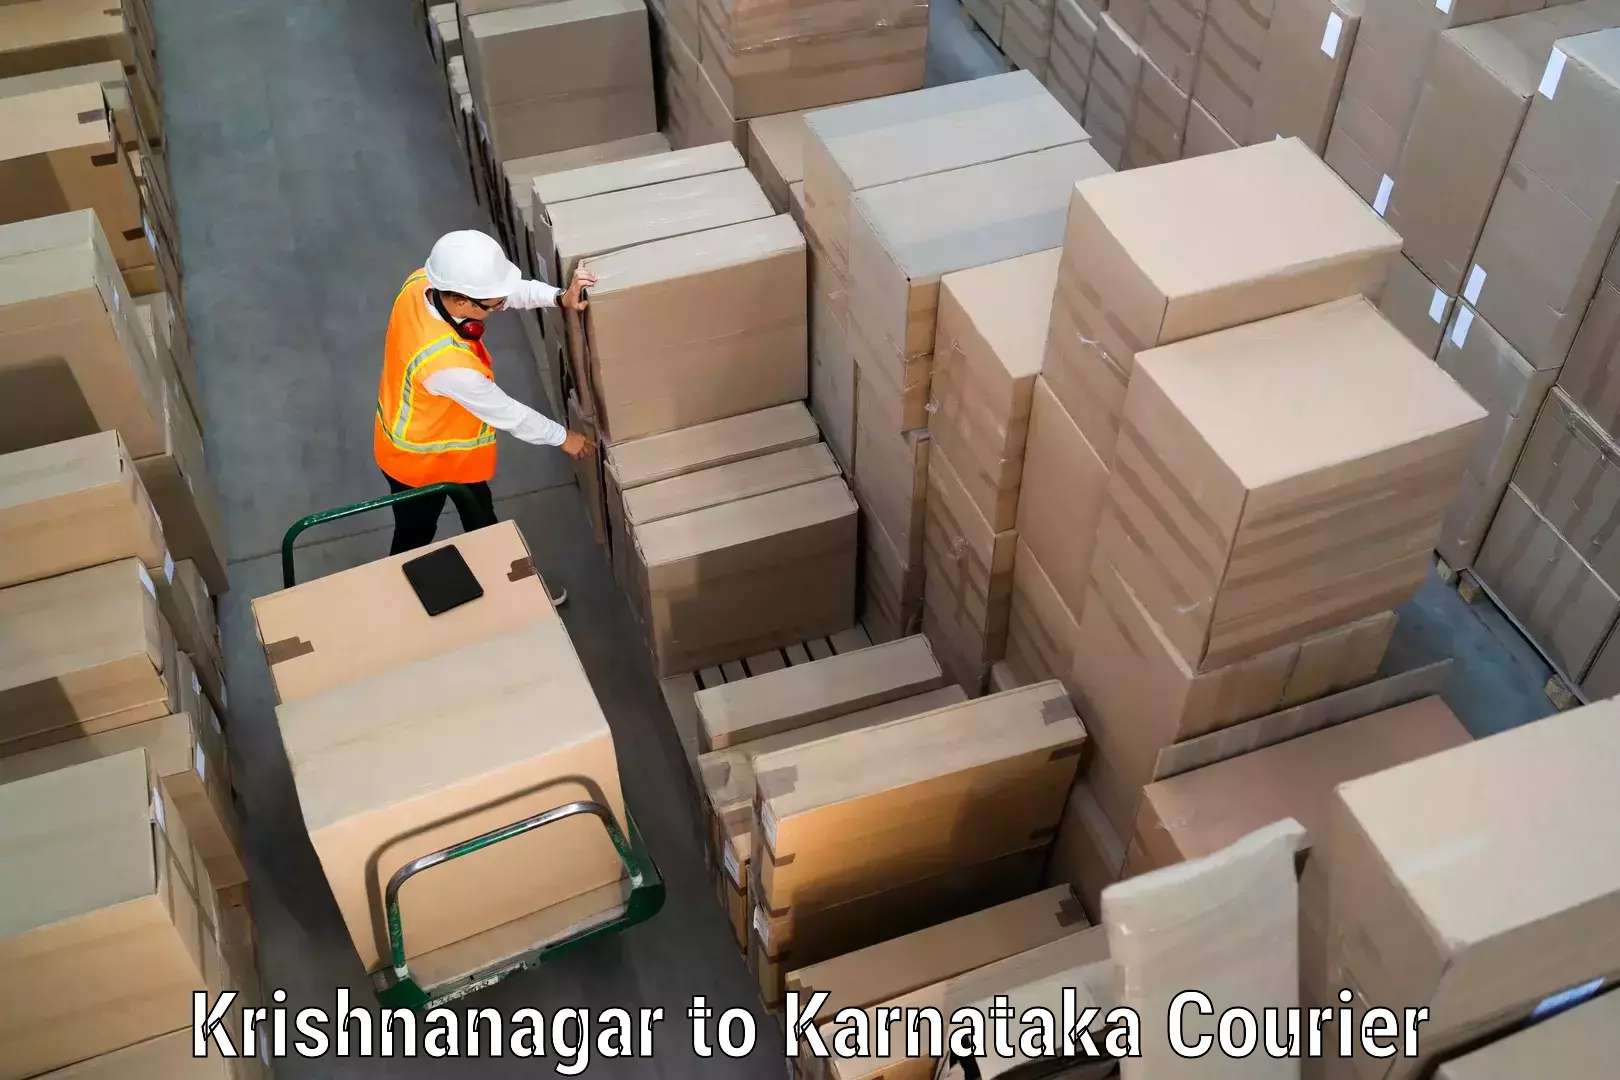 State-of-the-art courier technology Krishnanagar to Yenepoya Mangalore